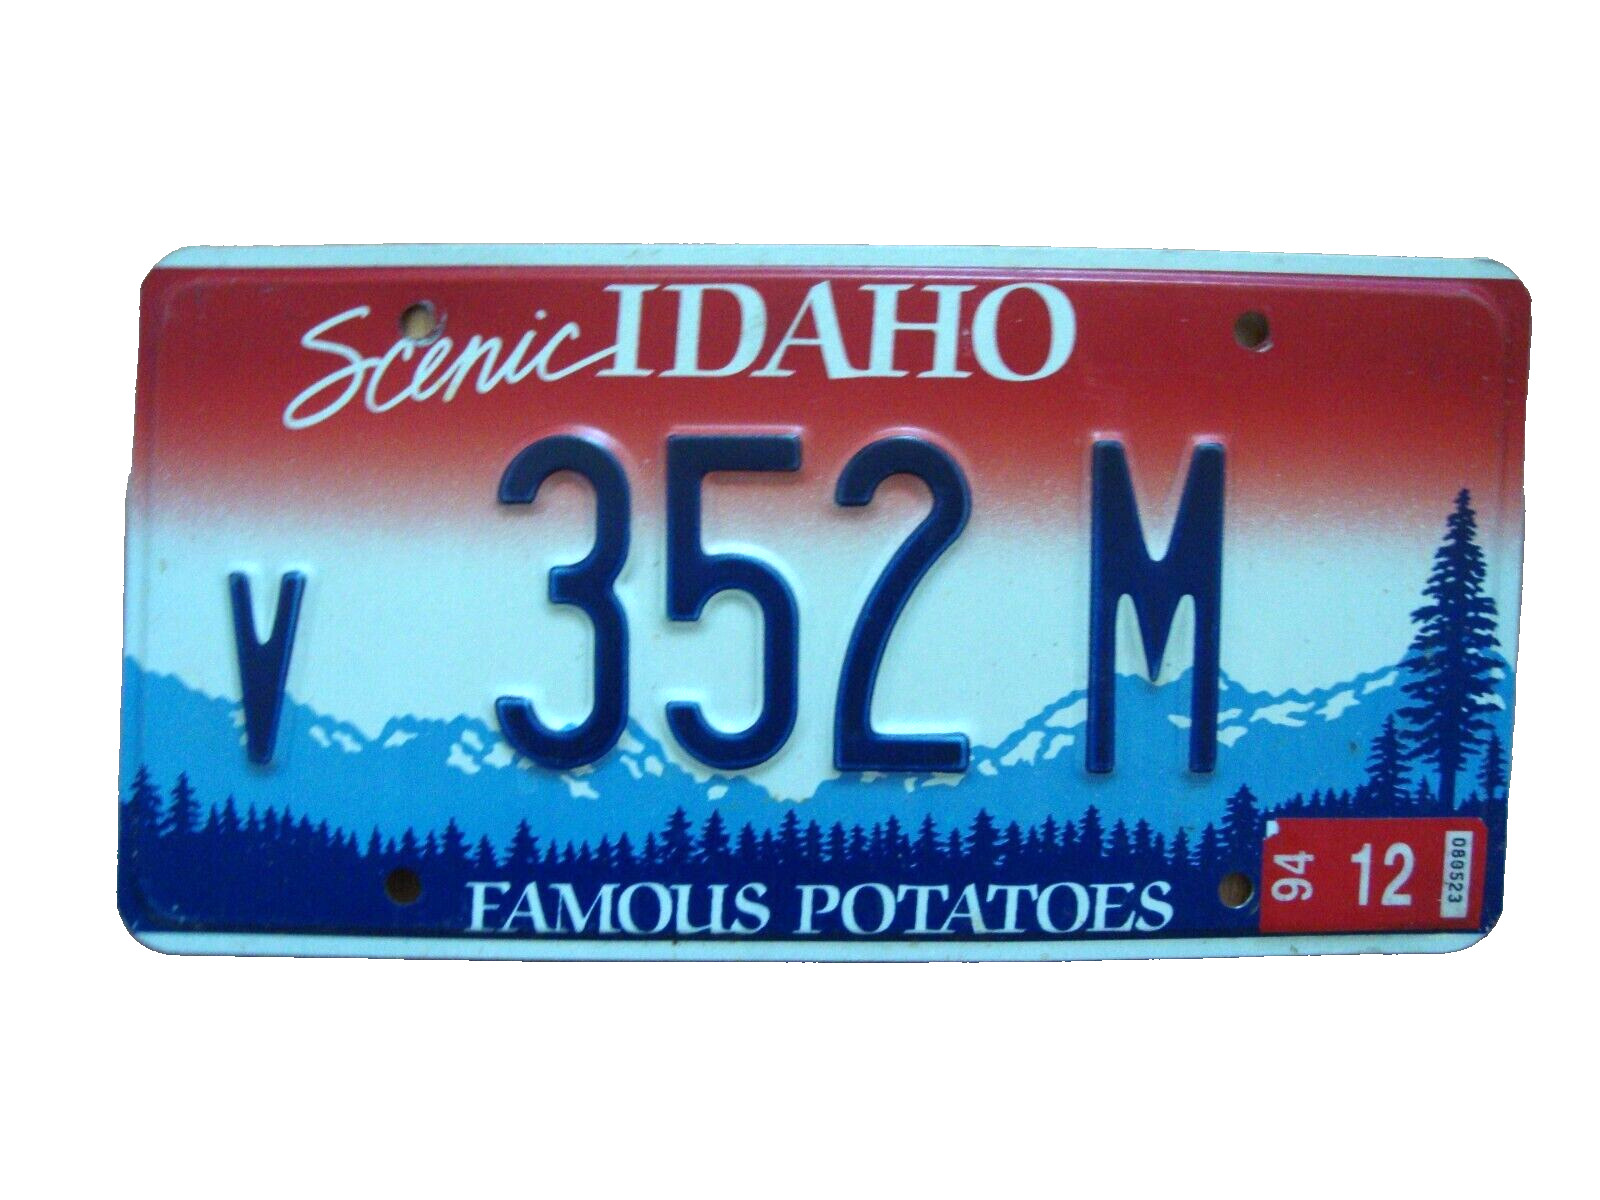 1994 Scenic Idaho famous potatoes license plate in original condition v 352 M